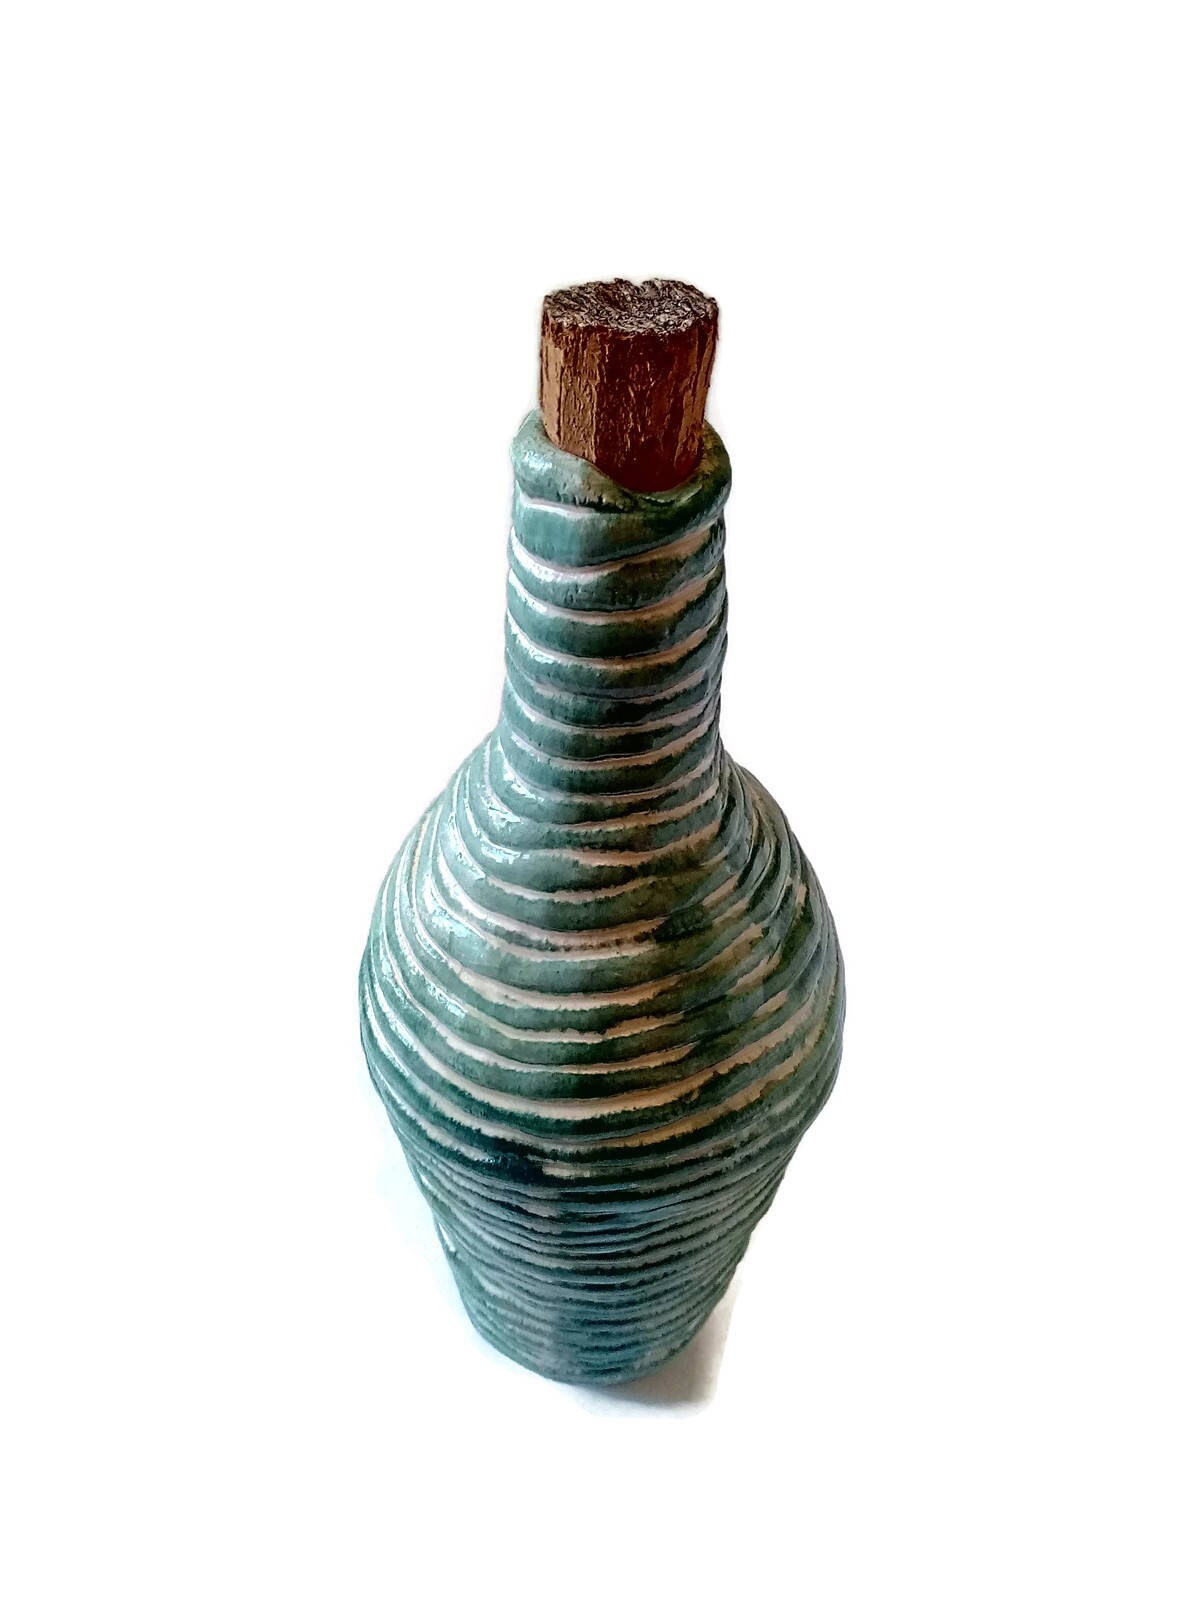 Handmade Ceramic Decorative Bottle With Cork Stopper, Housewarming Gift First Home, Green Irregular Shaped Vase Textured - Ceramica Ana Rafael